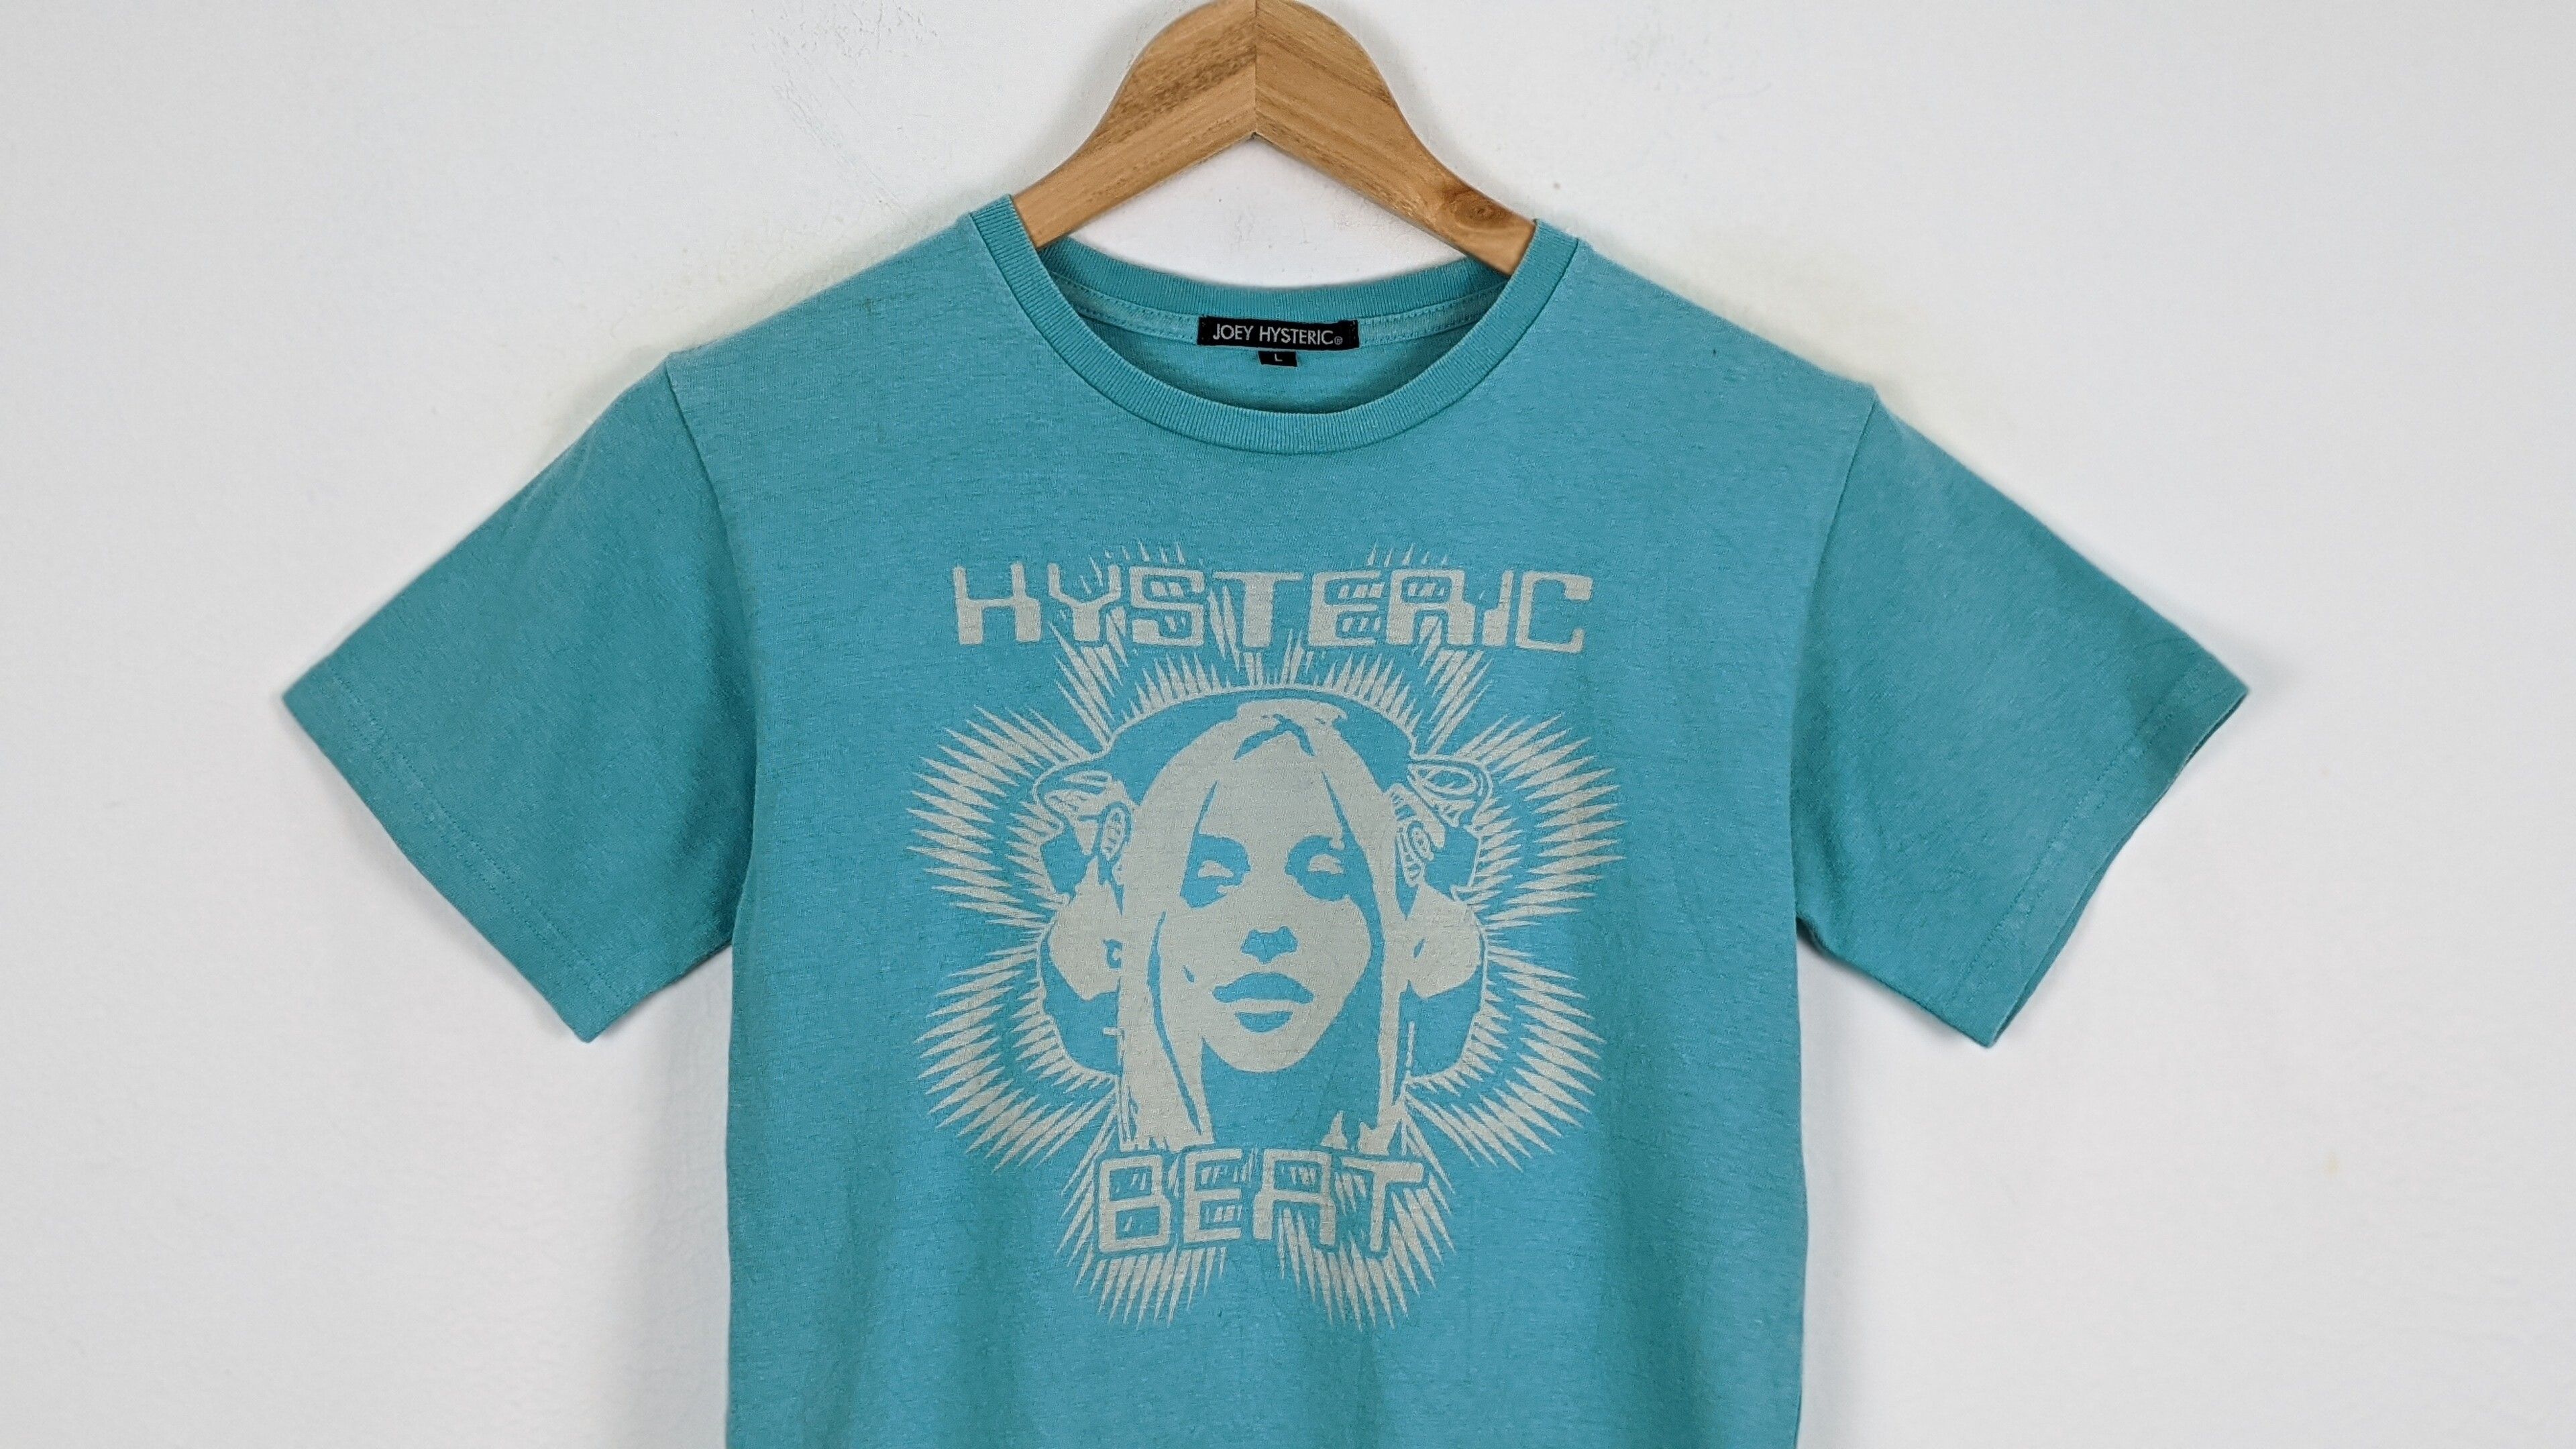 Joey Hysteric Glamour Beat shirt - 3